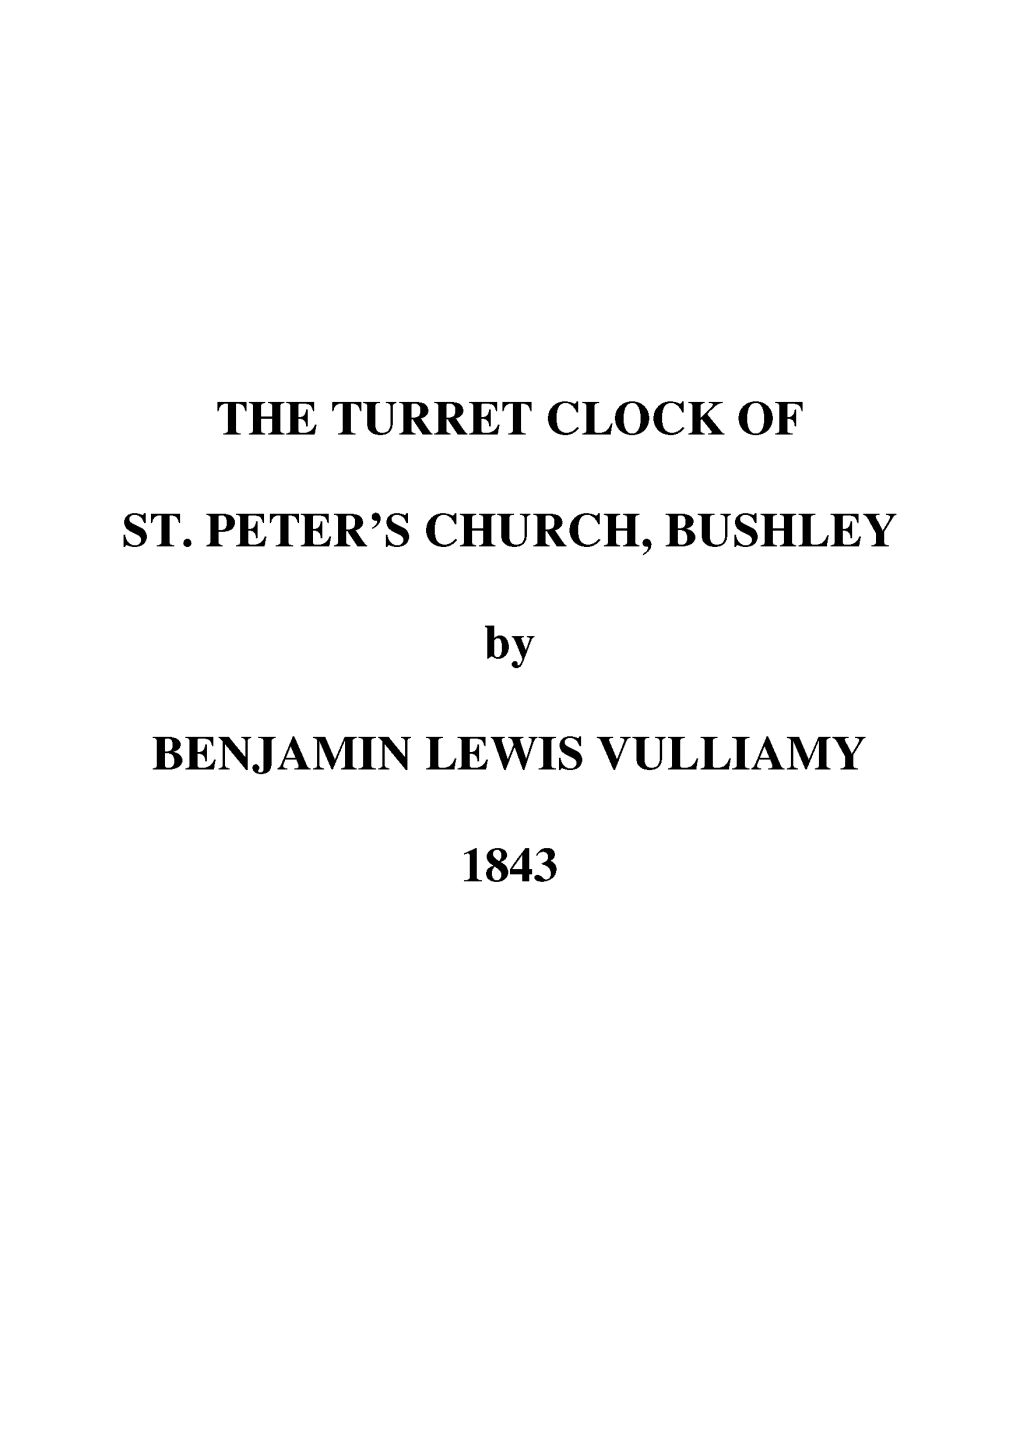 Vulliamy's Turret Clock in Bushley Church